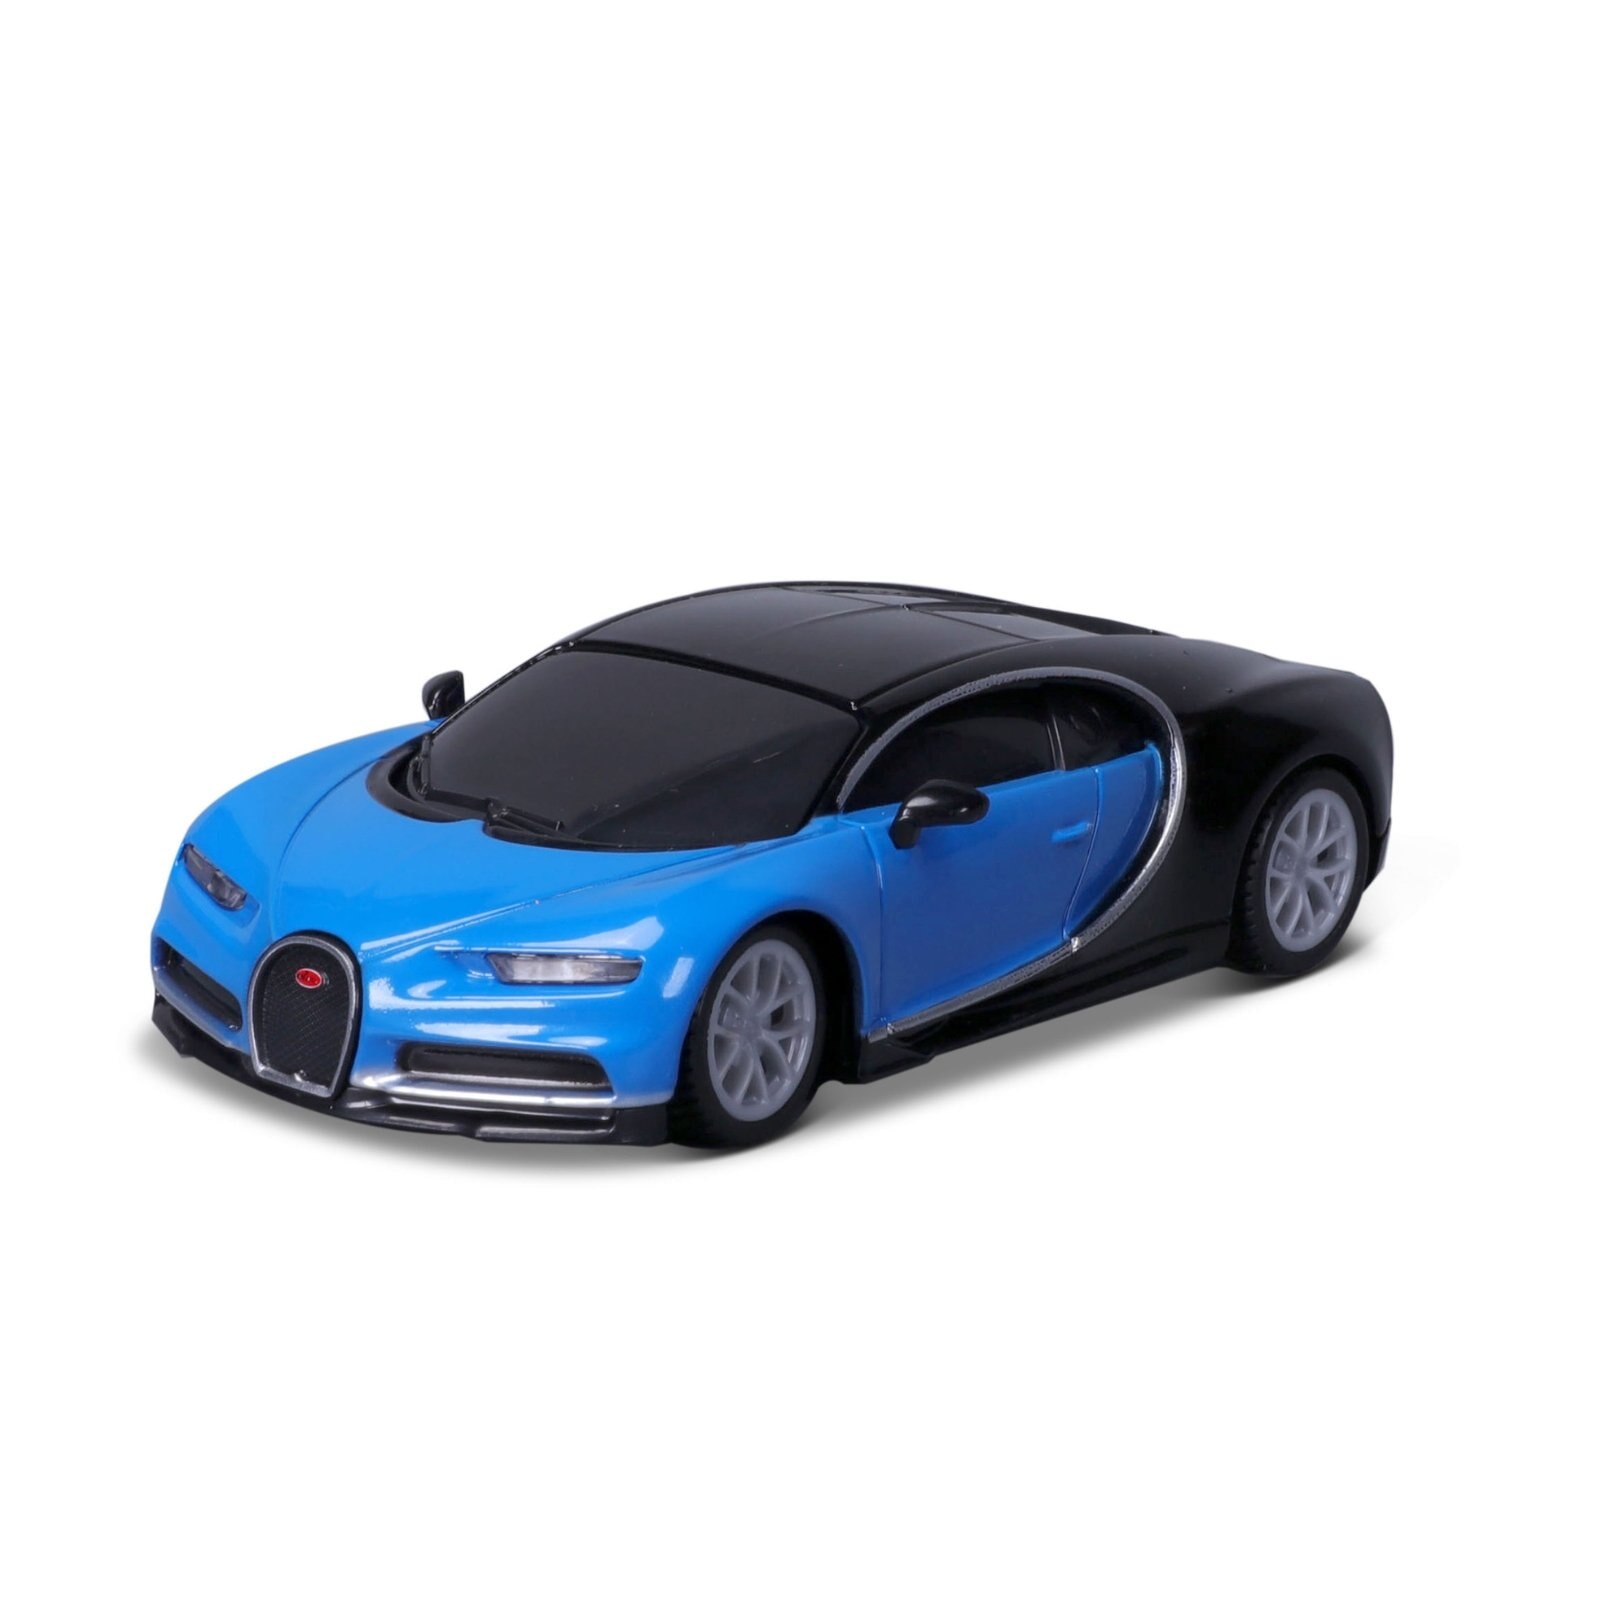 Bugatti Chiron Toy 1:41 Maisto Blue/Black scale